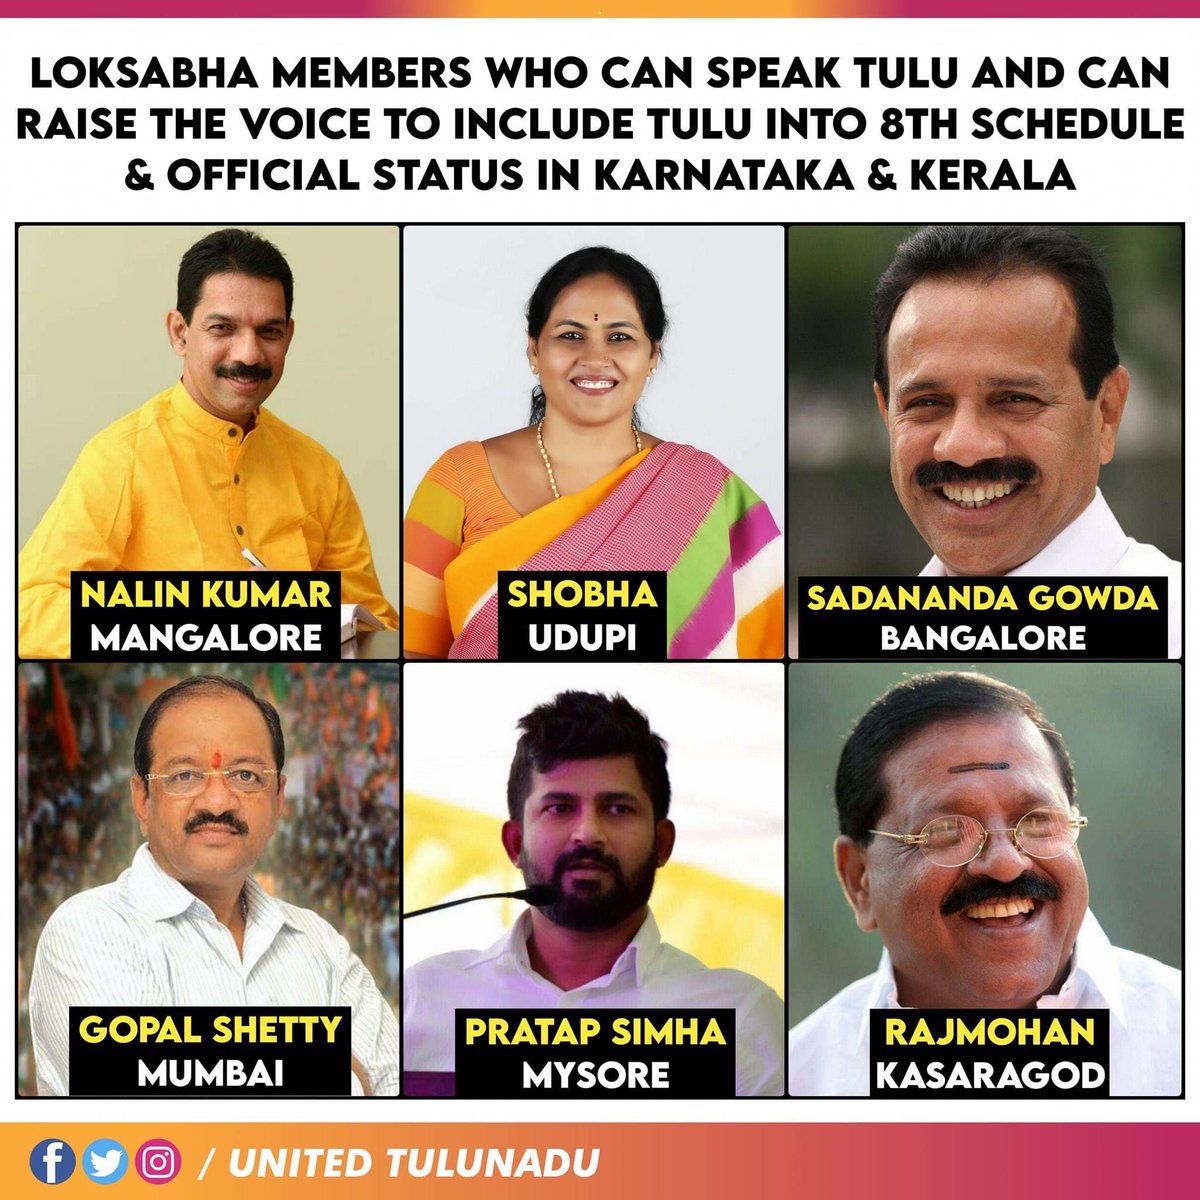 We have 6 Loksabha members who can speak Tulu language and raise the voice for Tulu! #tuluto8thschedule #TuluOfficialinKA_KL